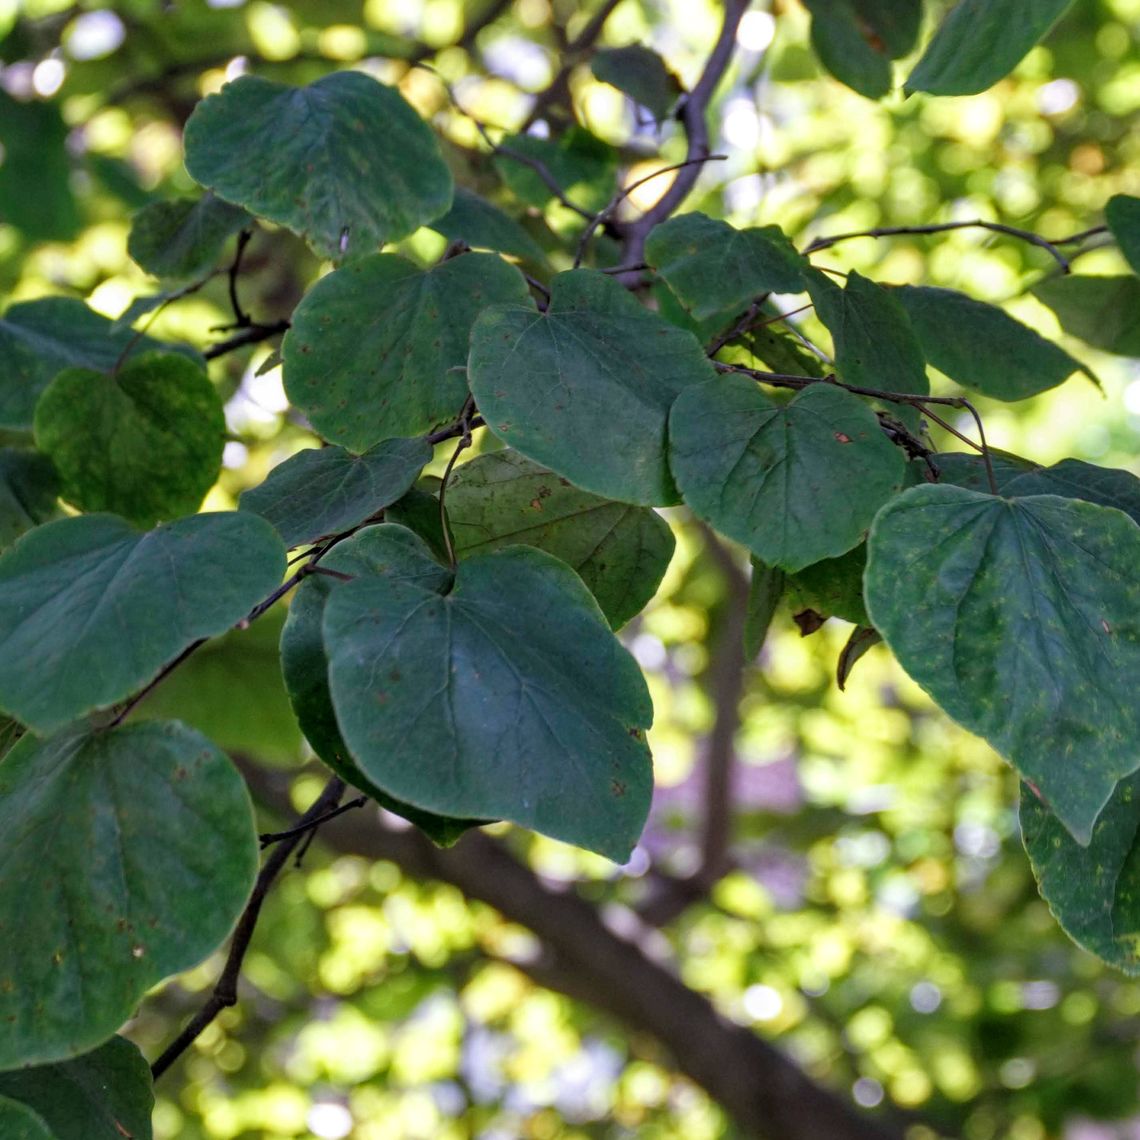 Eastern Redbud leaves